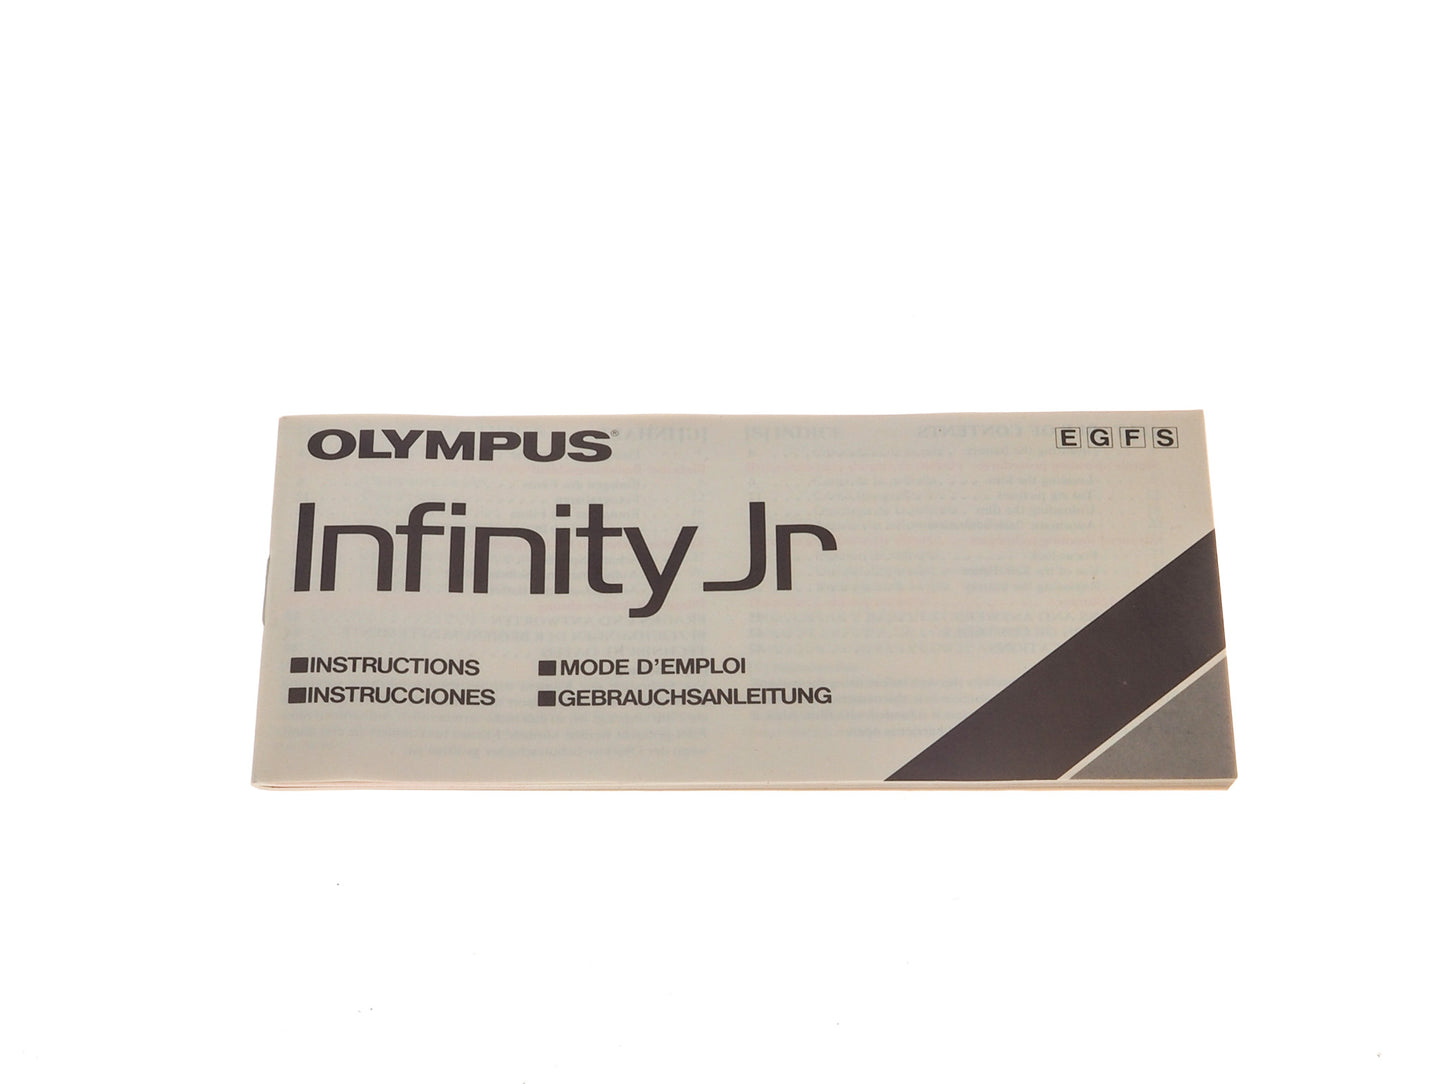 Olympus Infinity Jr Instruction